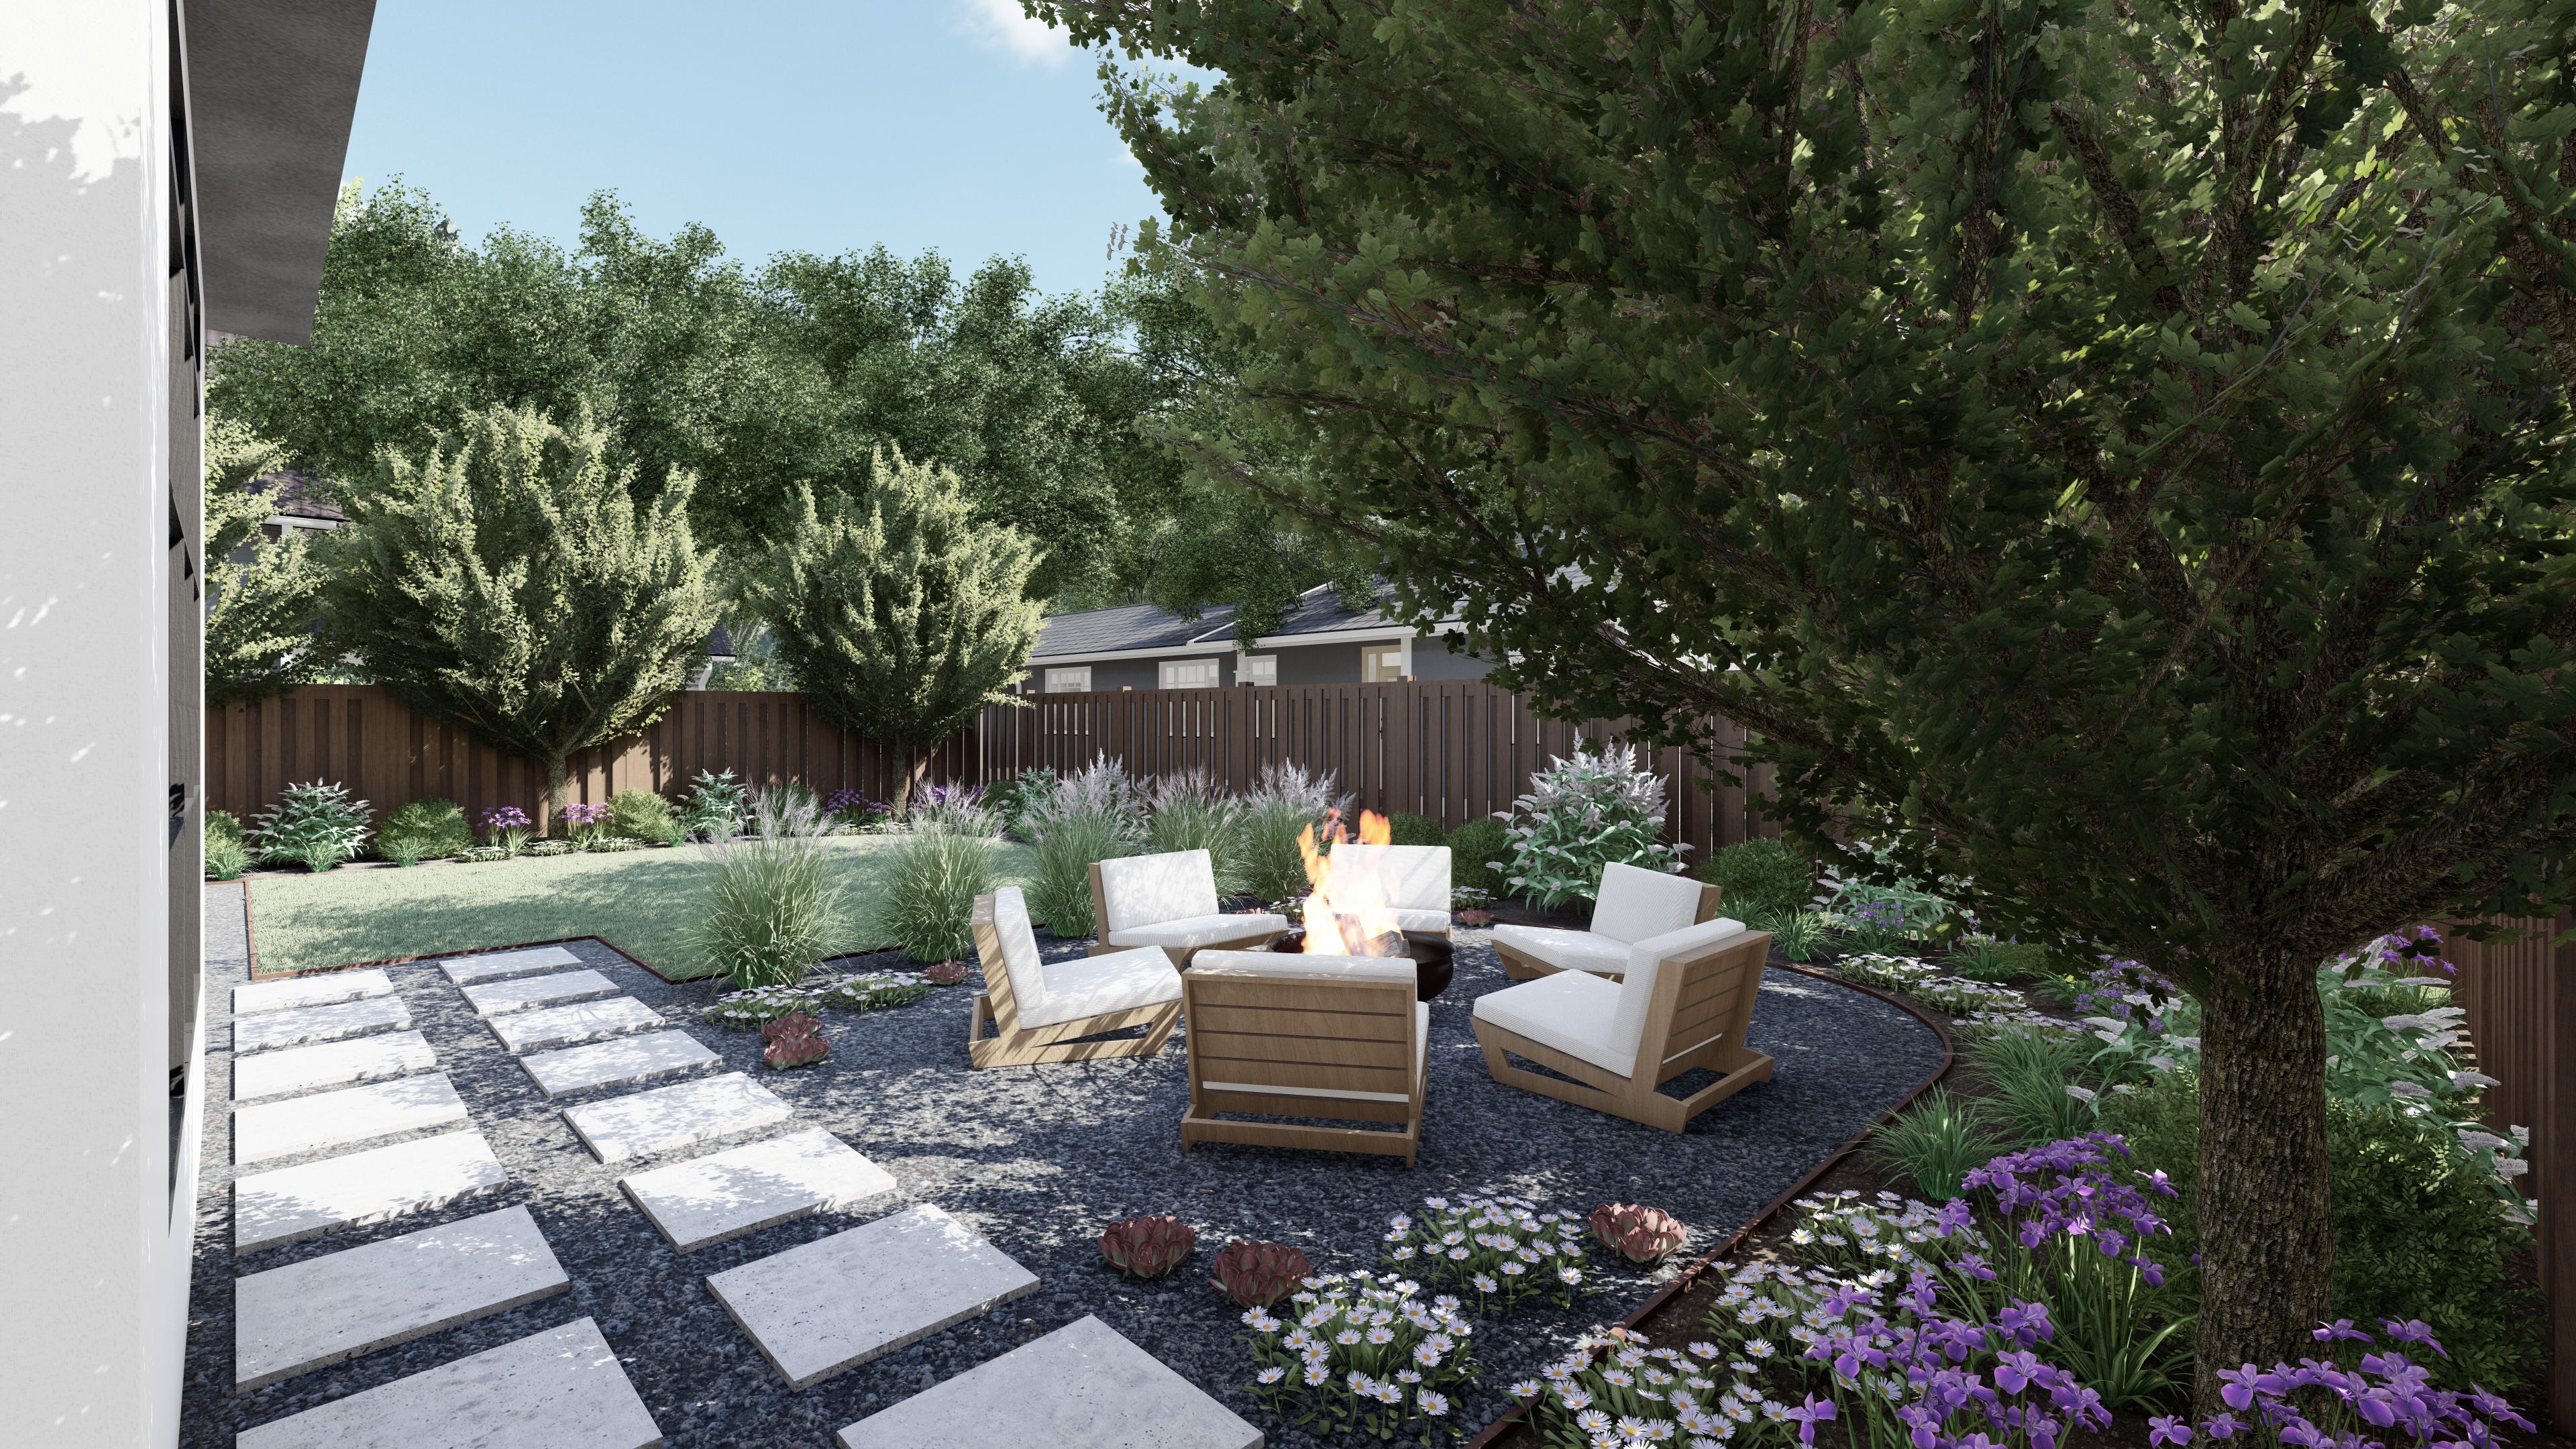 gravel patio ideas with planted gardens surrounding